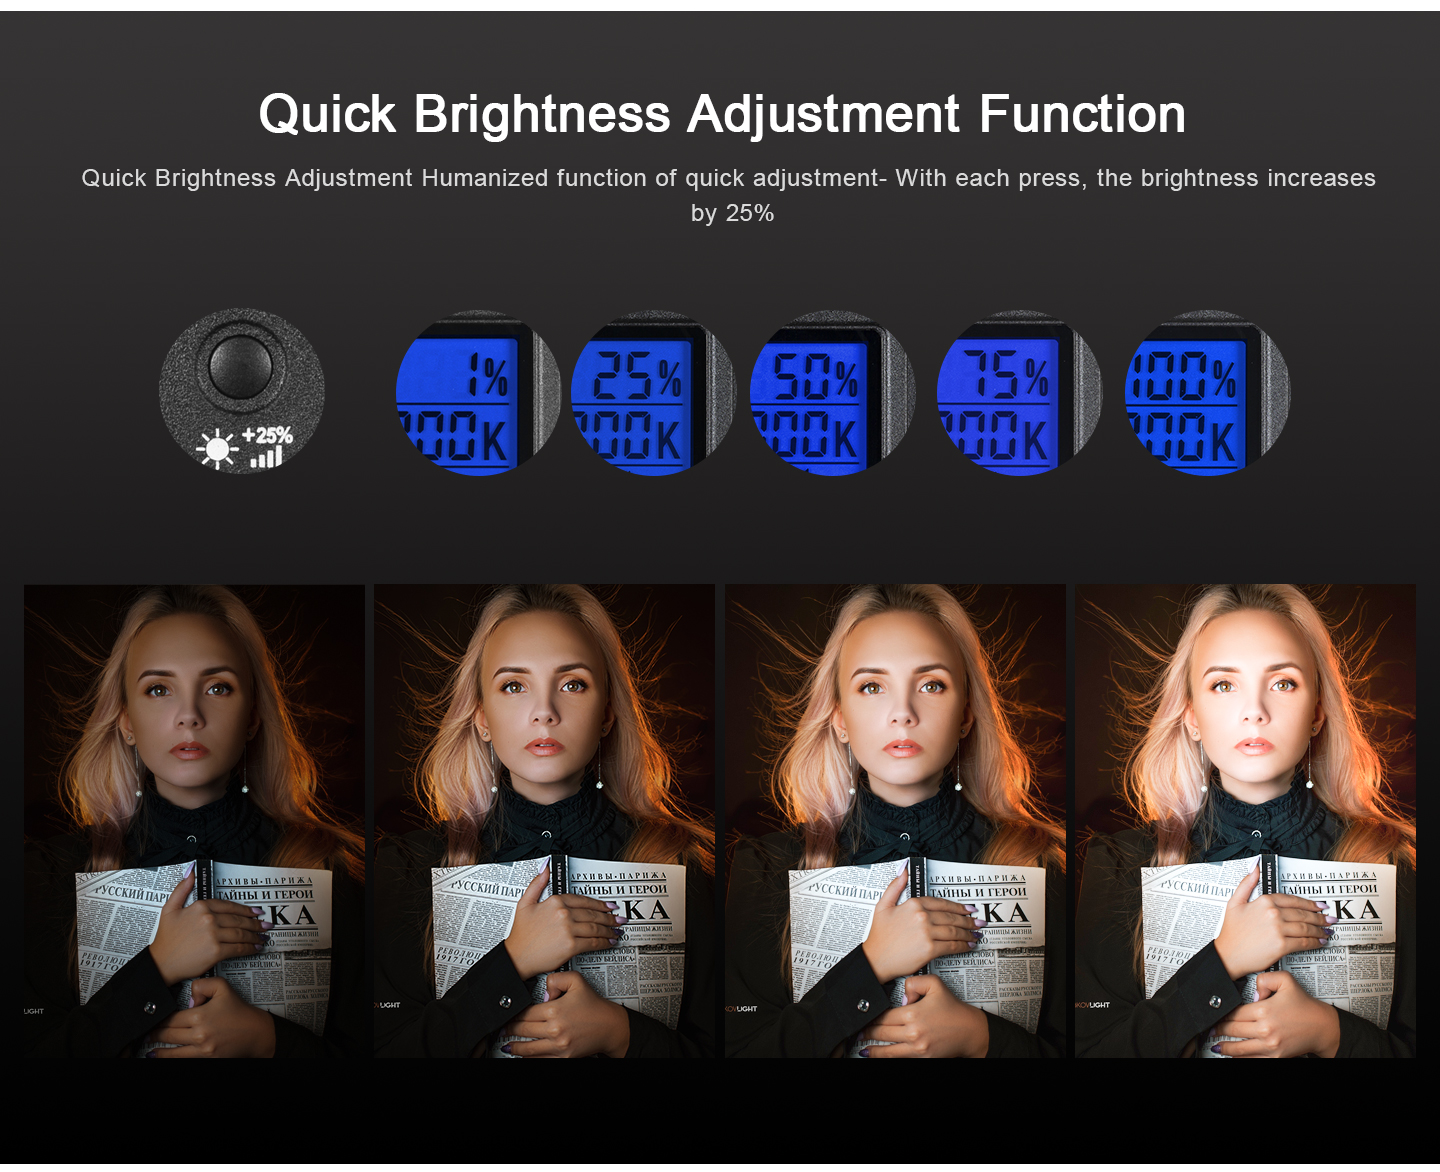 Quick Brightness Adjustment Function